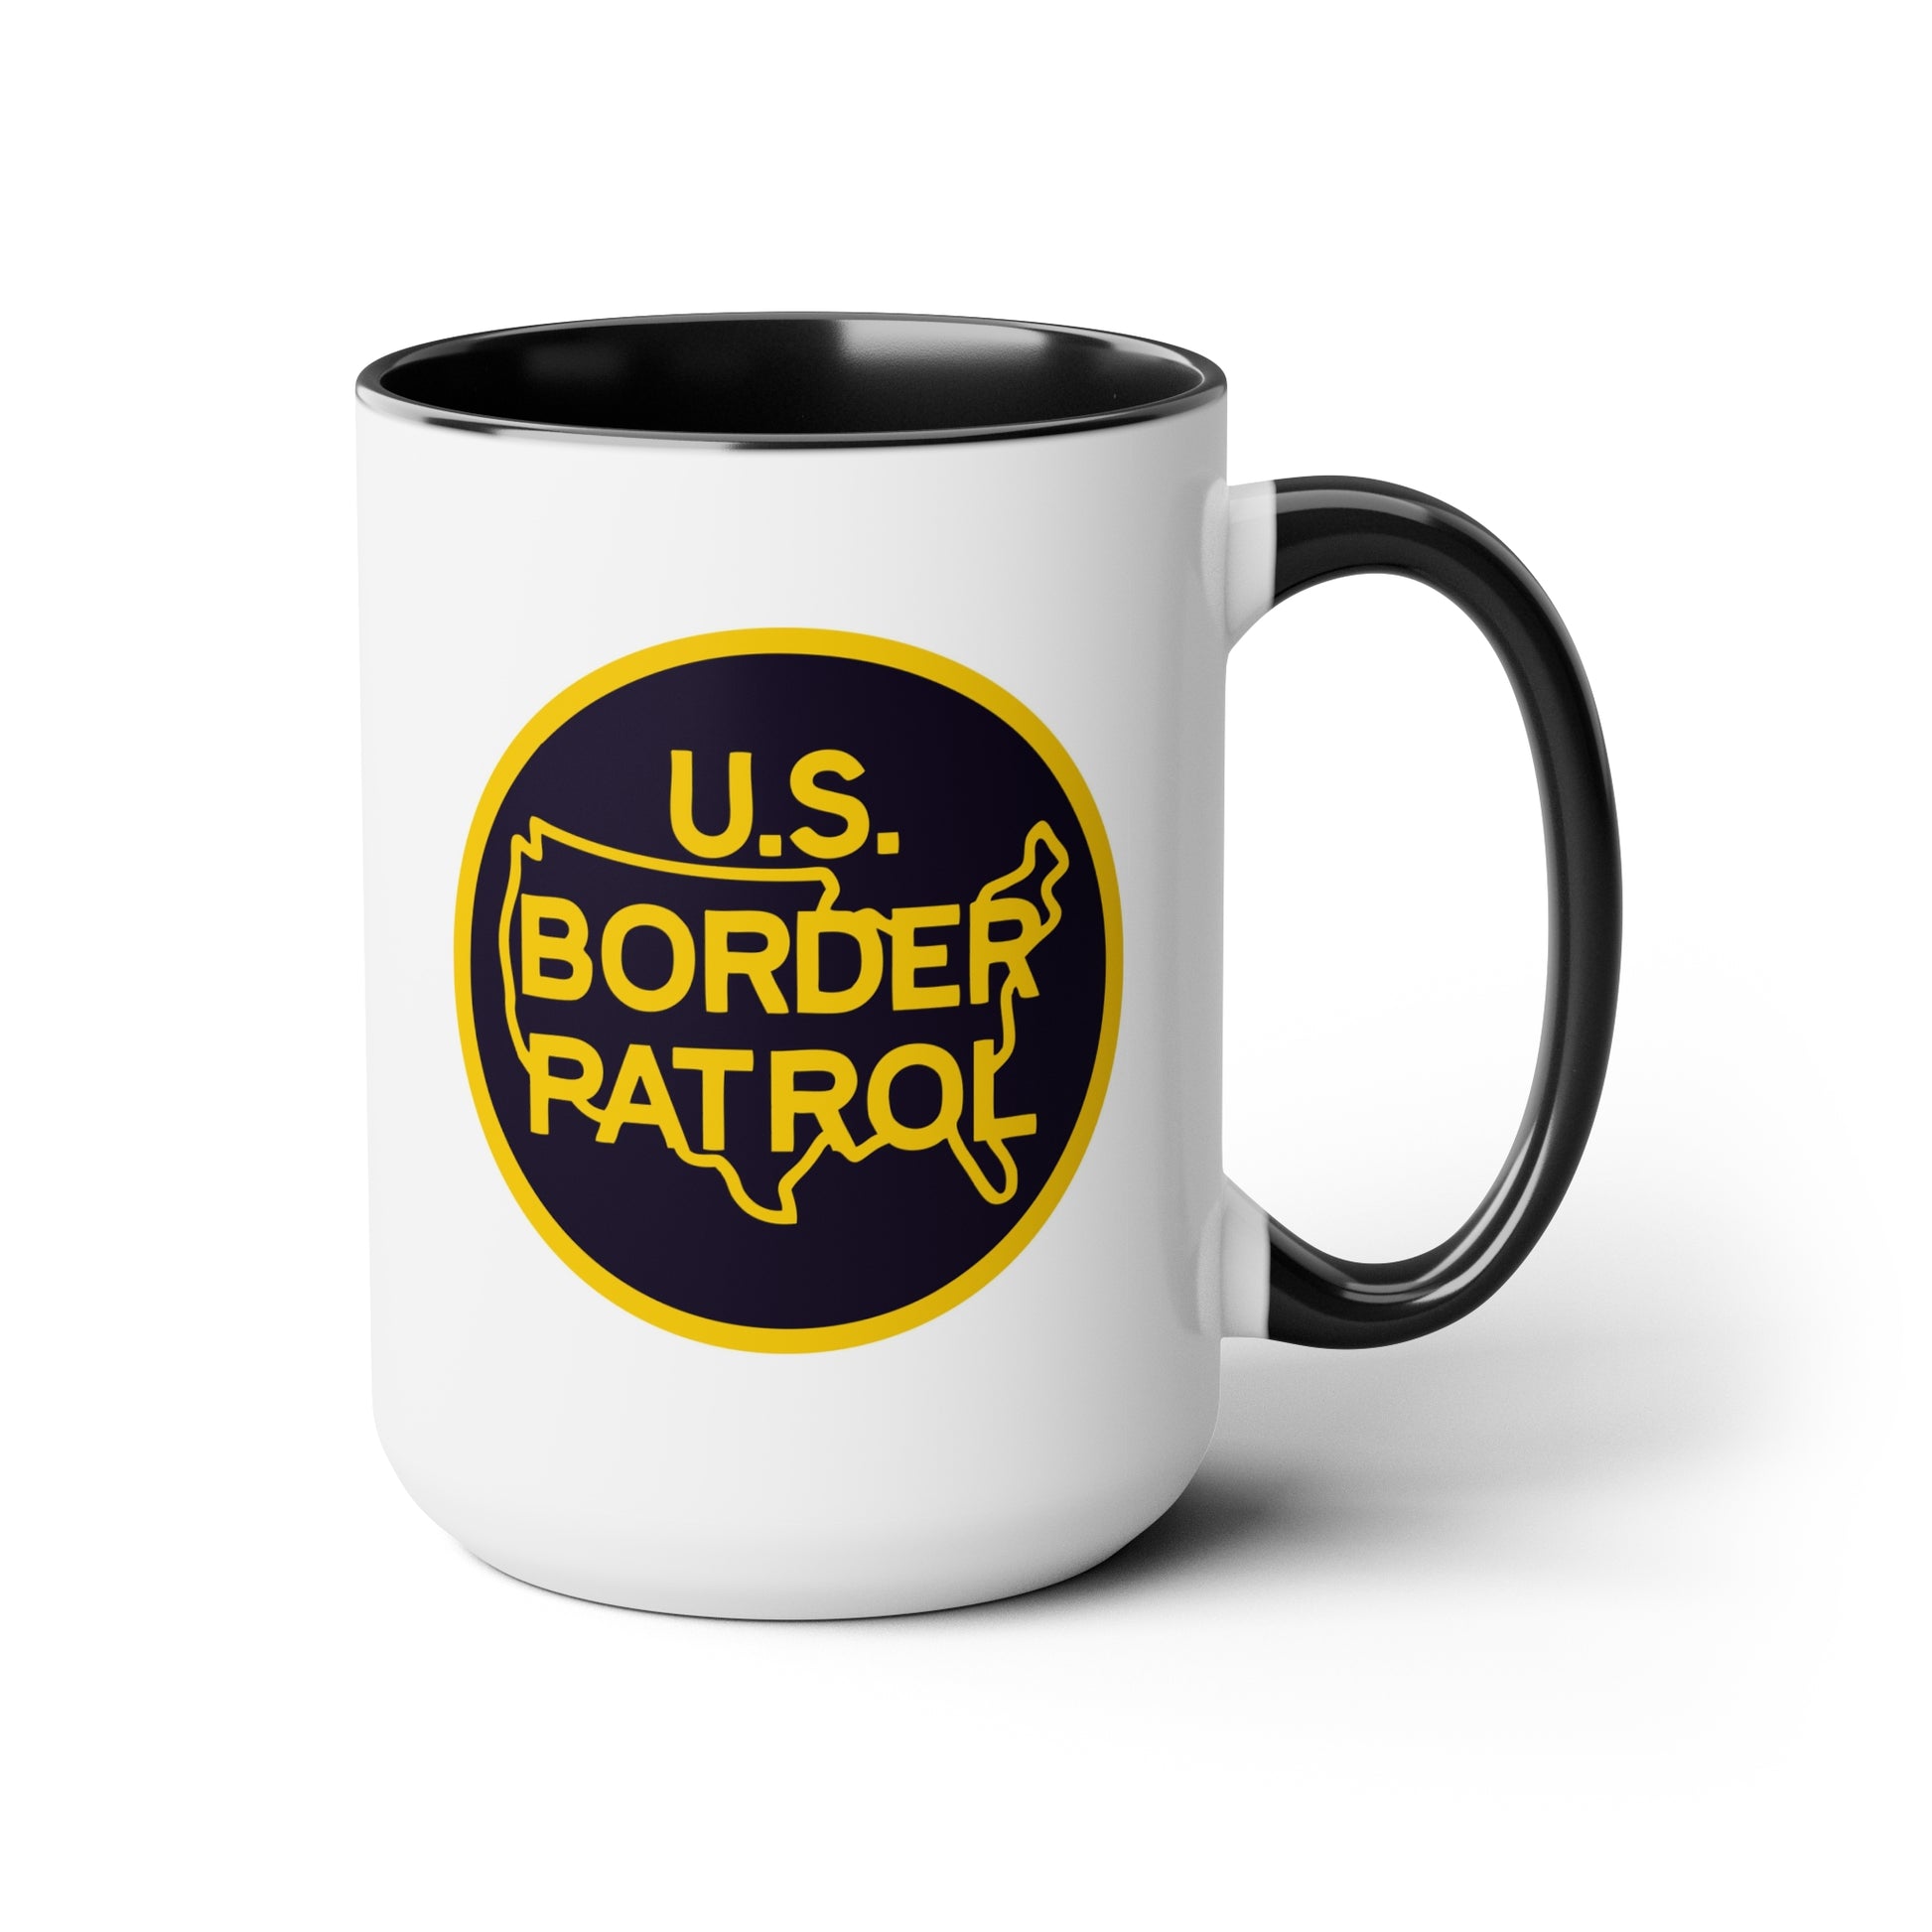 US Border Patrol Coffee Mugs - Double Sided Black Accent White Ceramic 15oz by TheGlassyLass